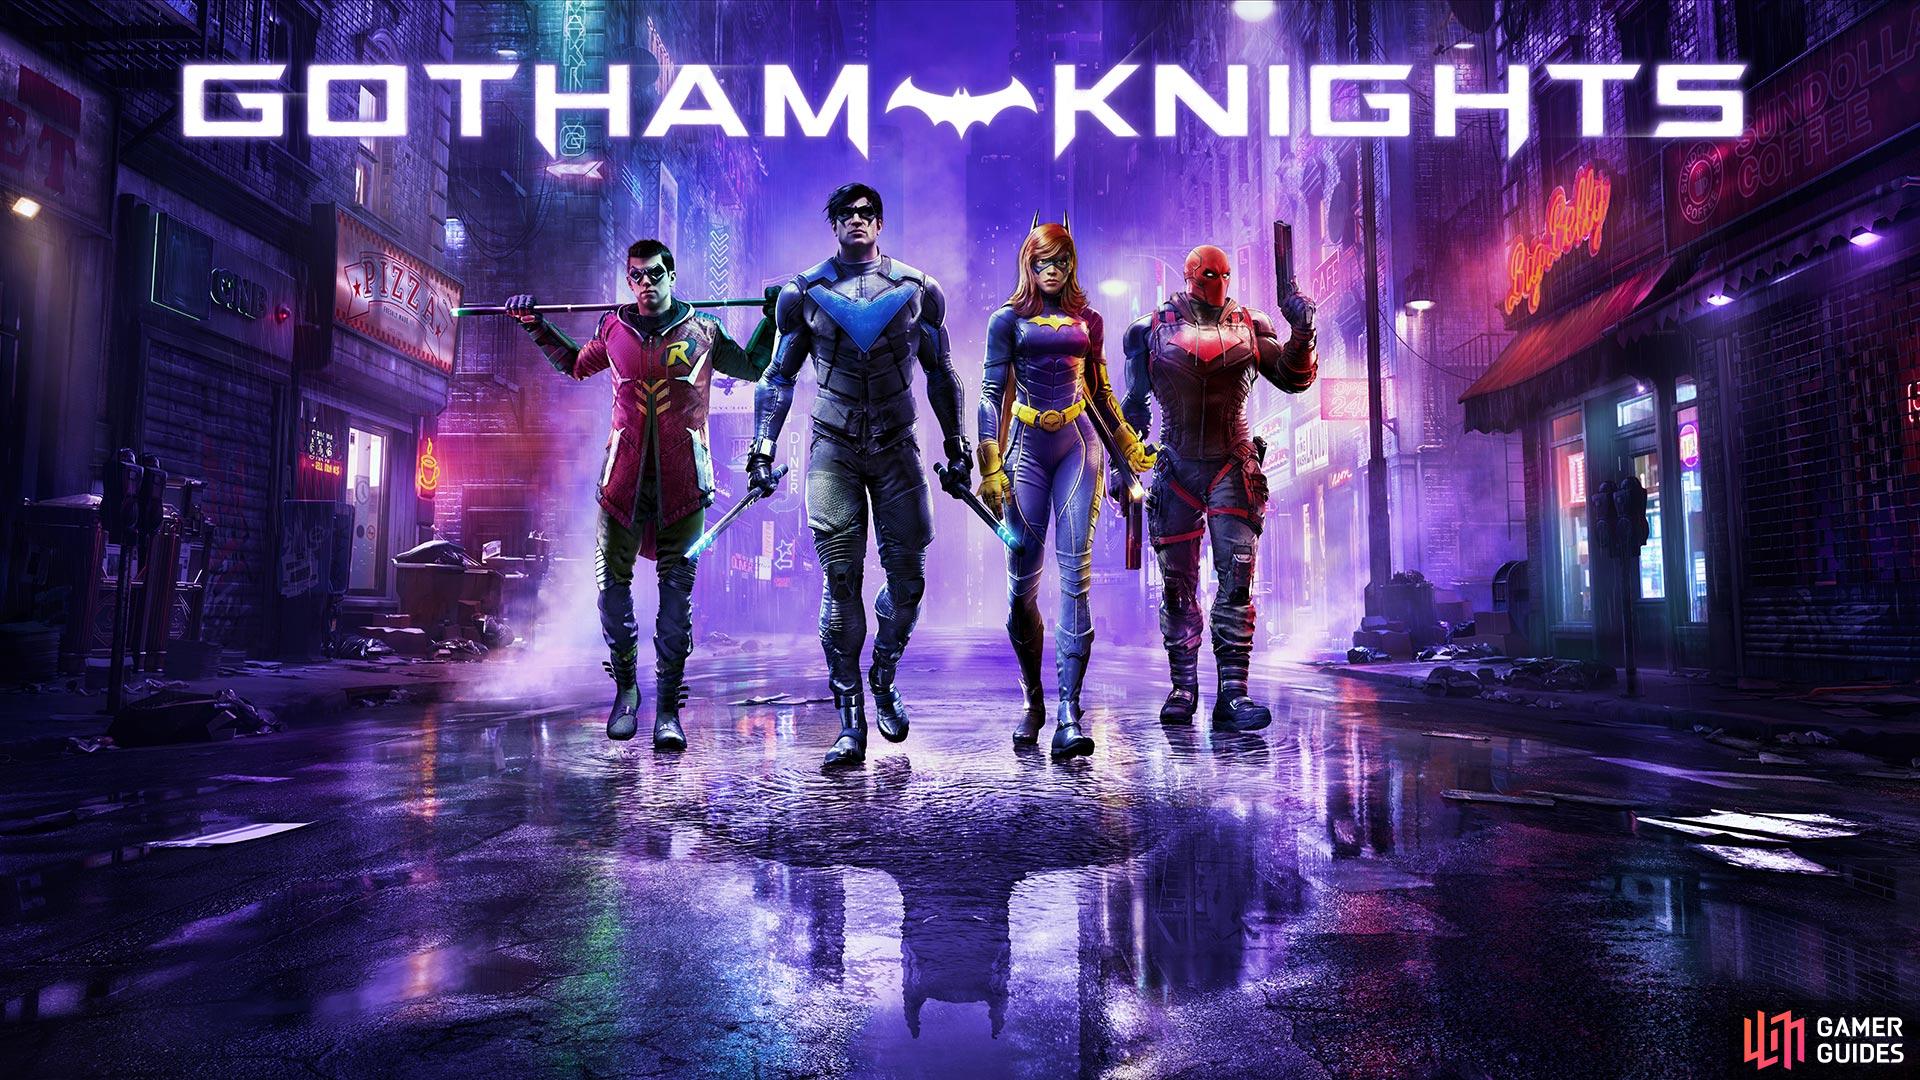 The Gotham Knights.